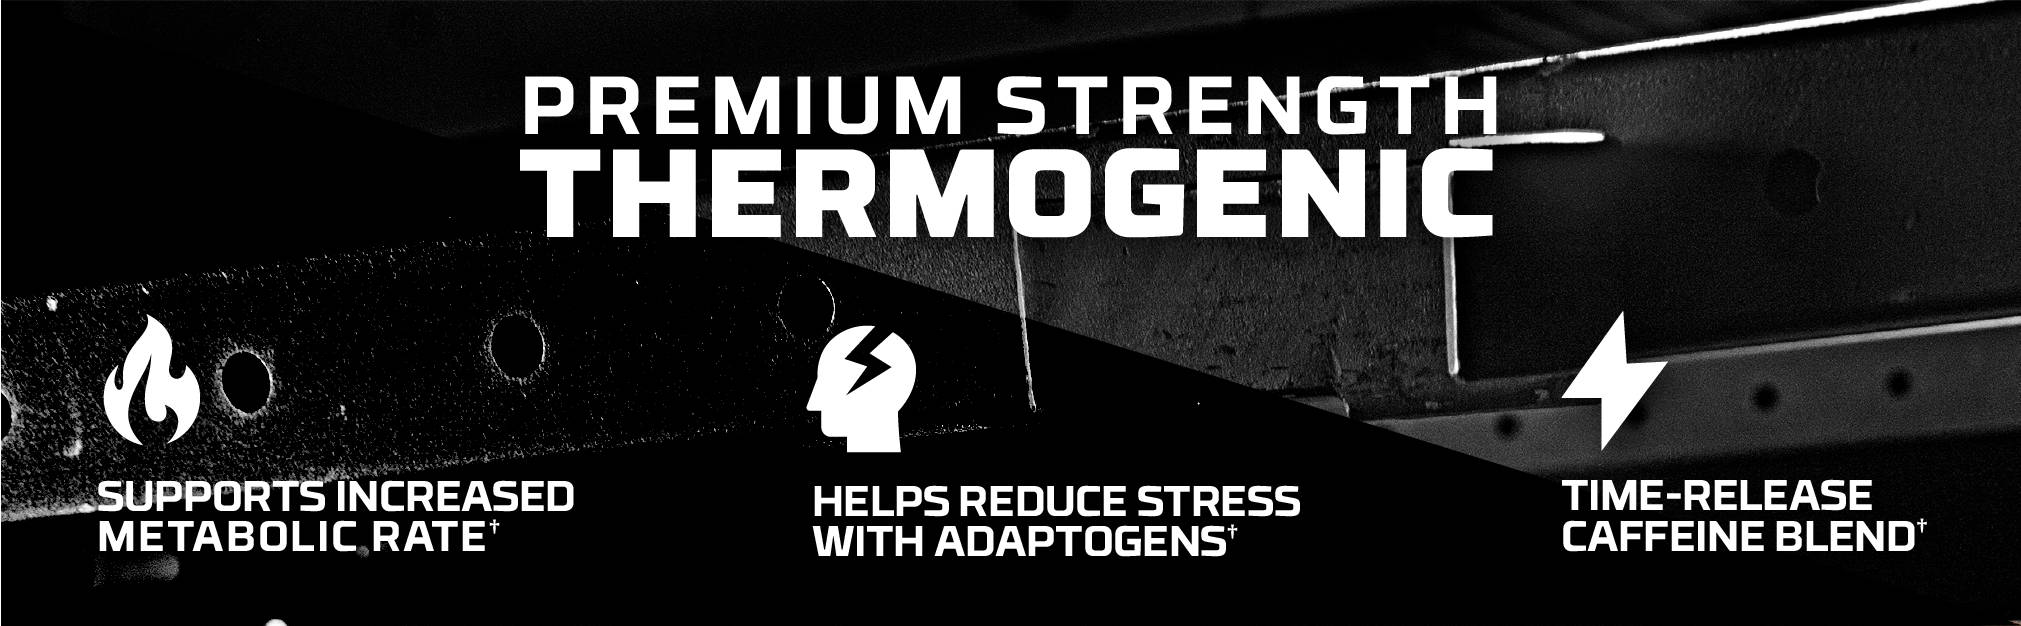 Premium Strength Thermogenic